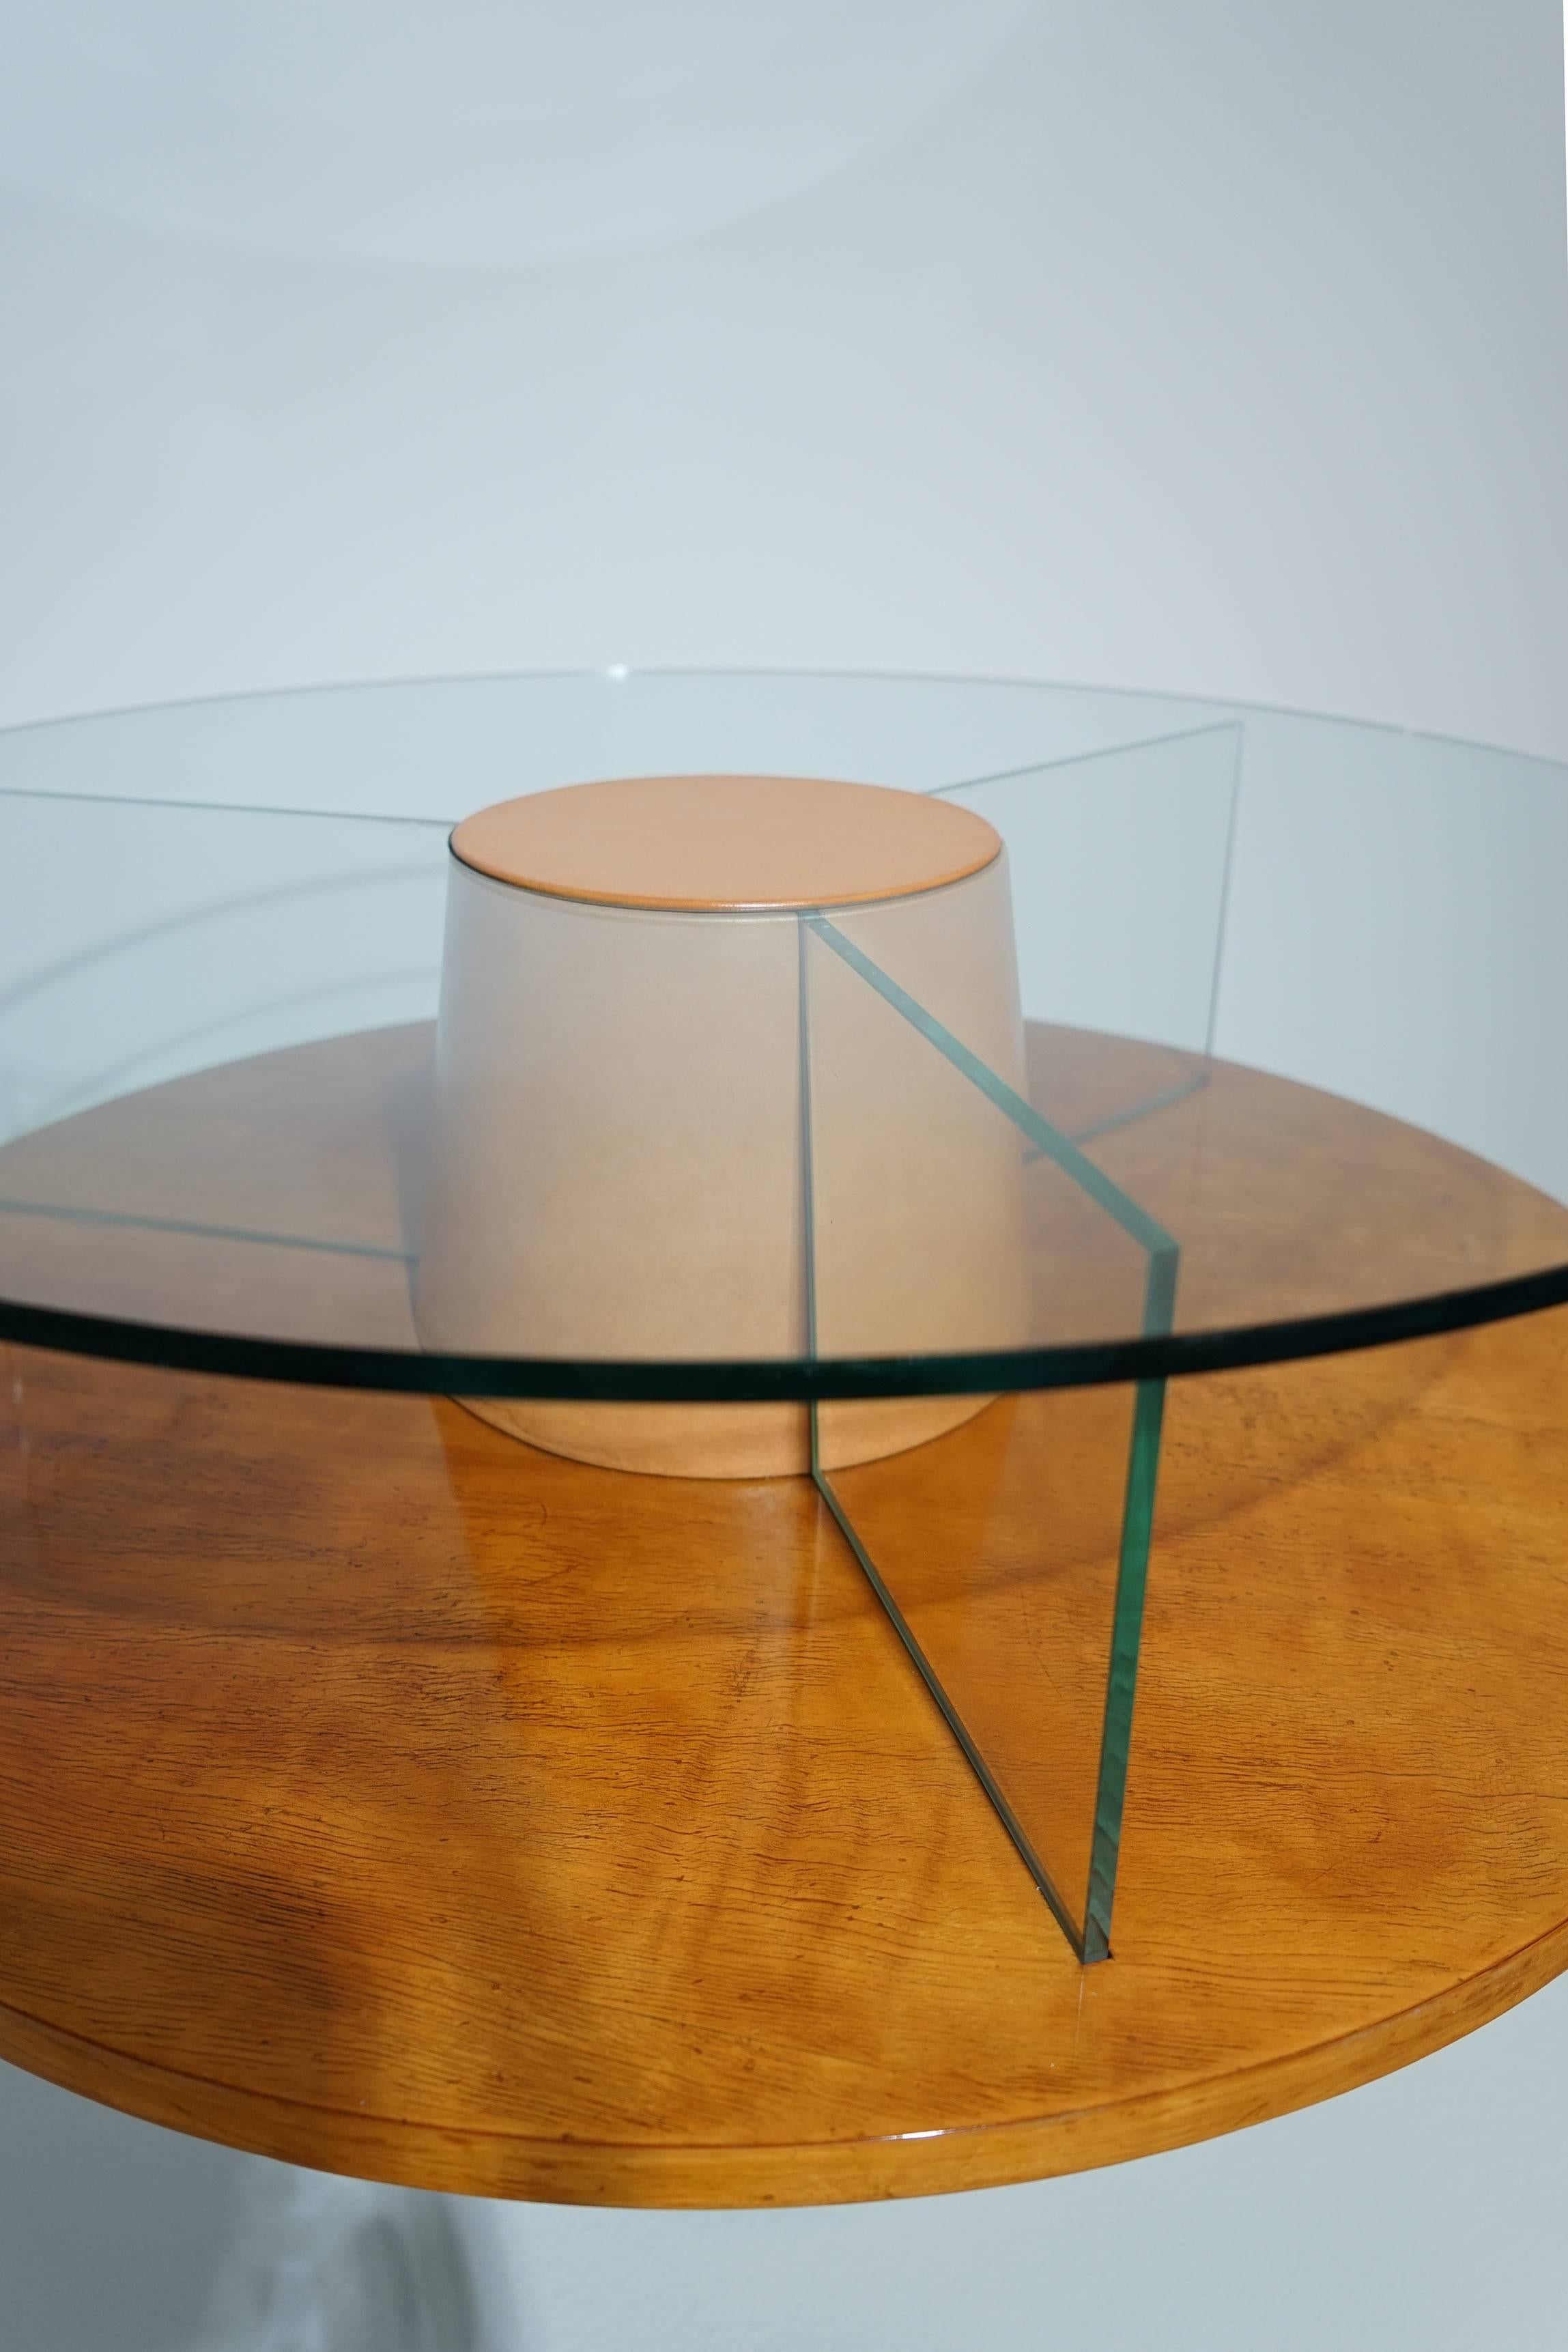 Side table by Osvaldo Borsani, Arredamento Borsani, 1936.
Revolving.